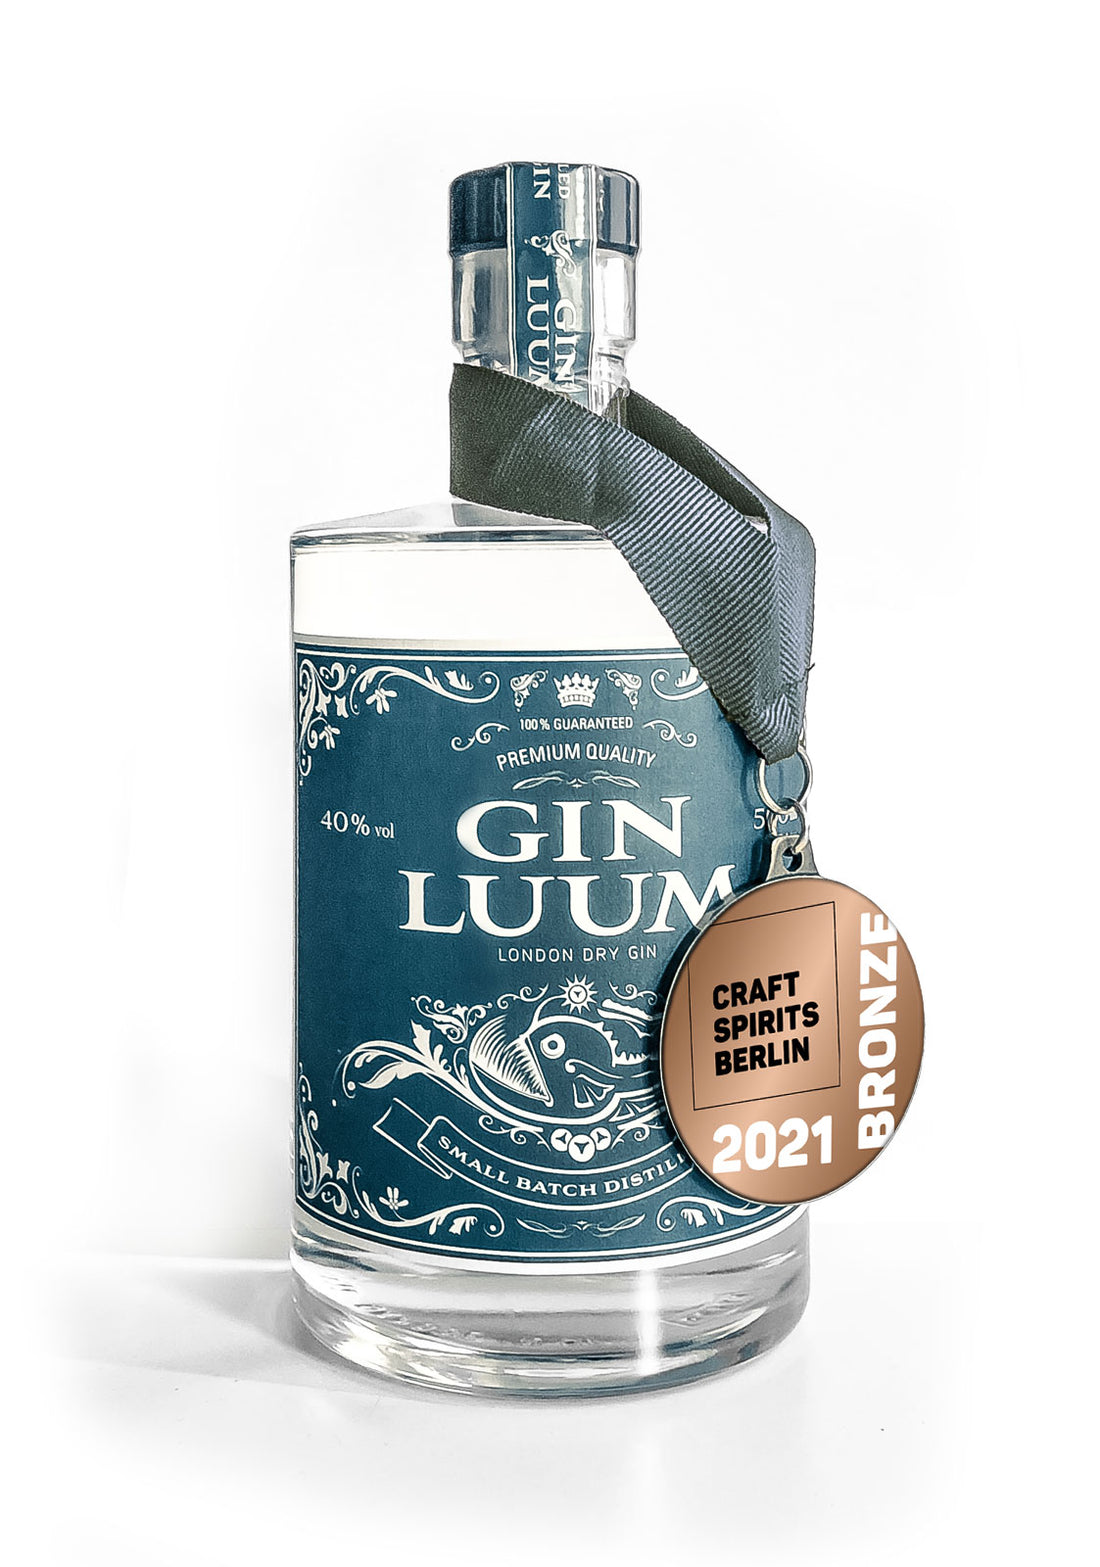 Gin Luum gewinnt Bronze bei den Craft Spirits Berlin-Awards 2021!